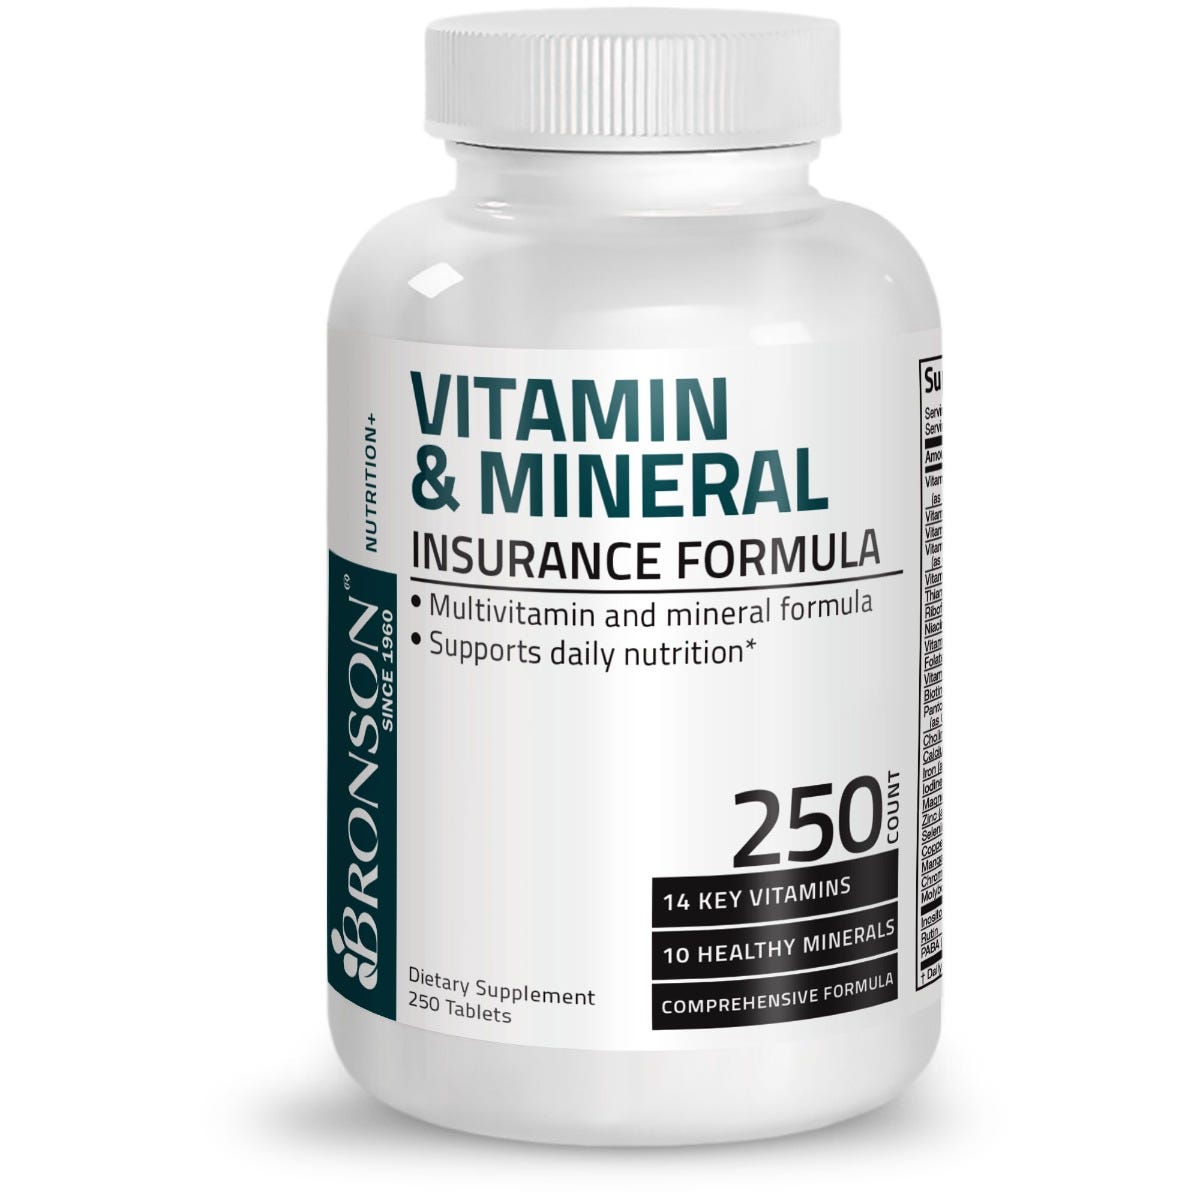 Vitamin & Mineral Insurance Formula - 250 Tablets view 1 of 4